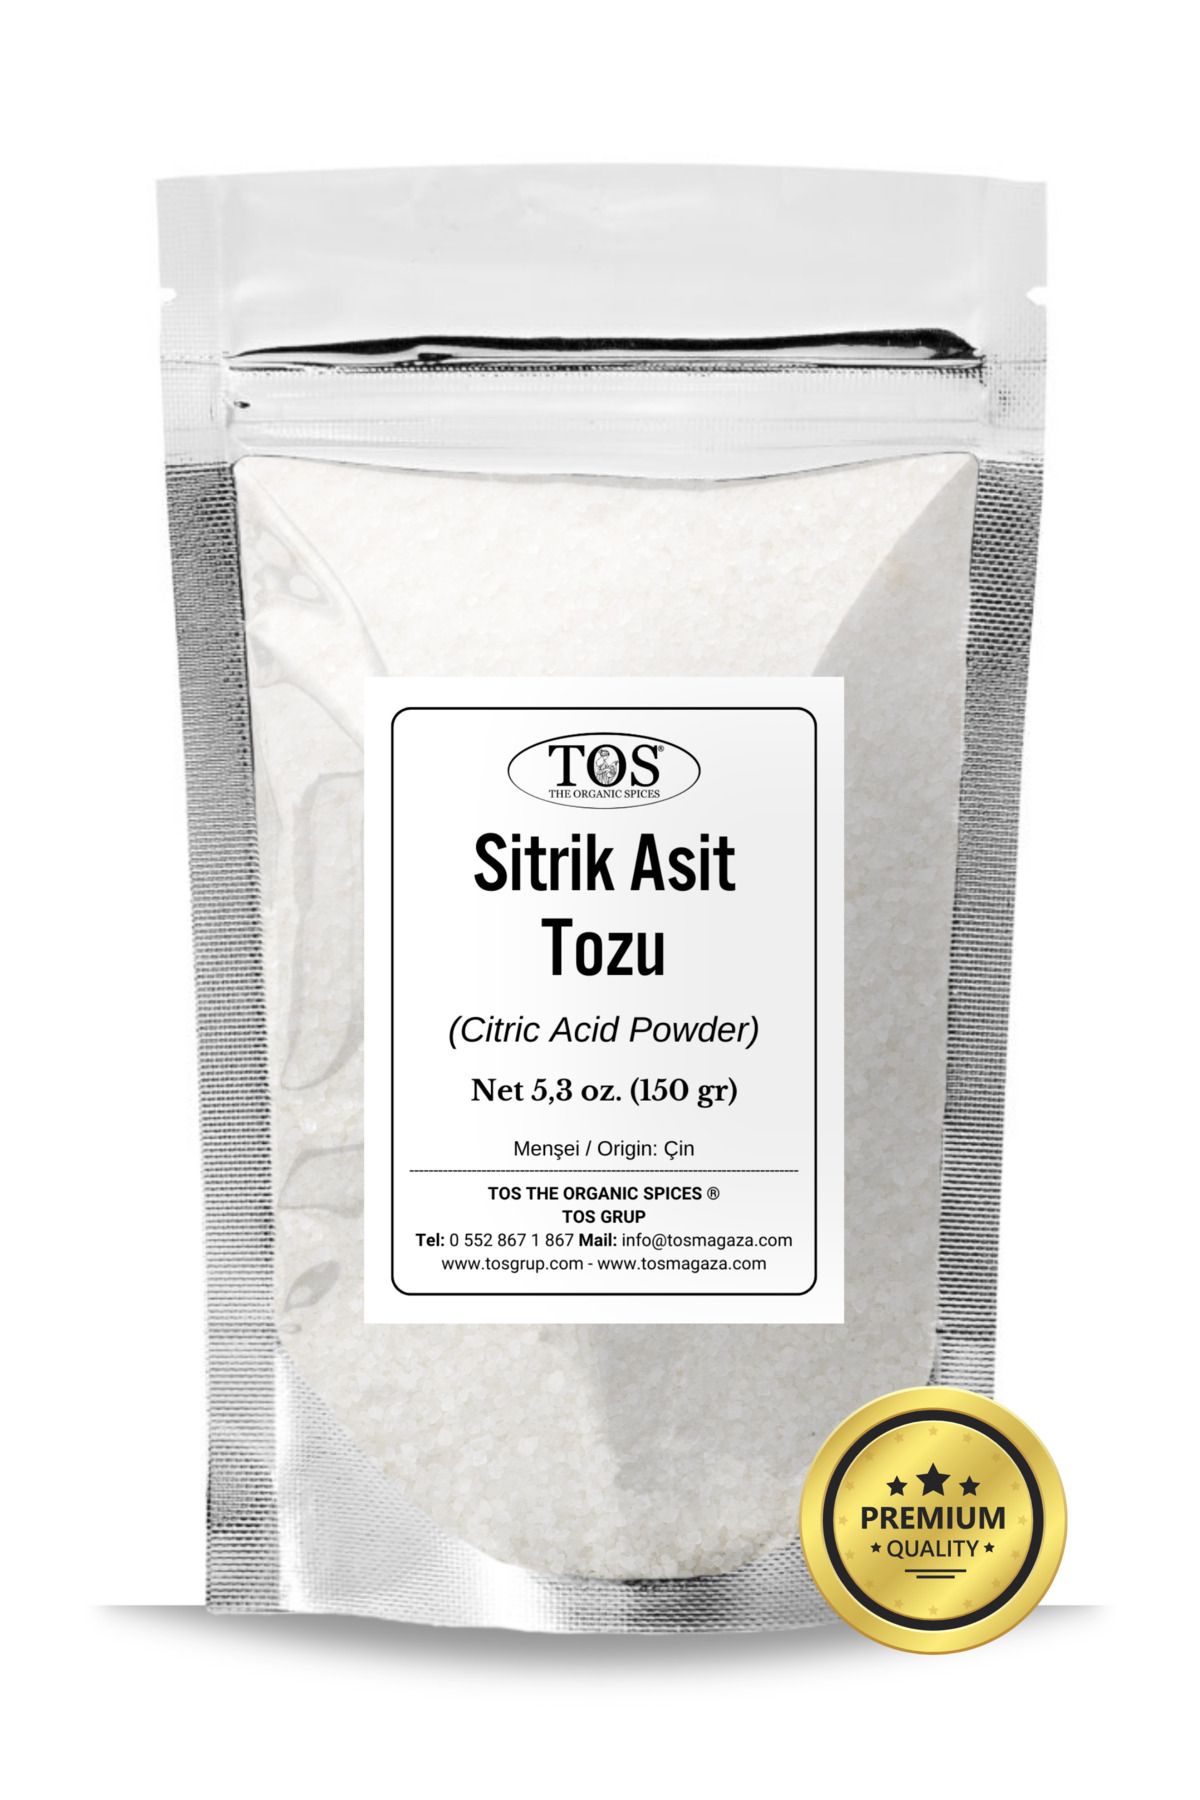 TOS The Organic Spices Sitrik Asit Tozu 150 gr (1. KALİTE) Citric Acid Powder